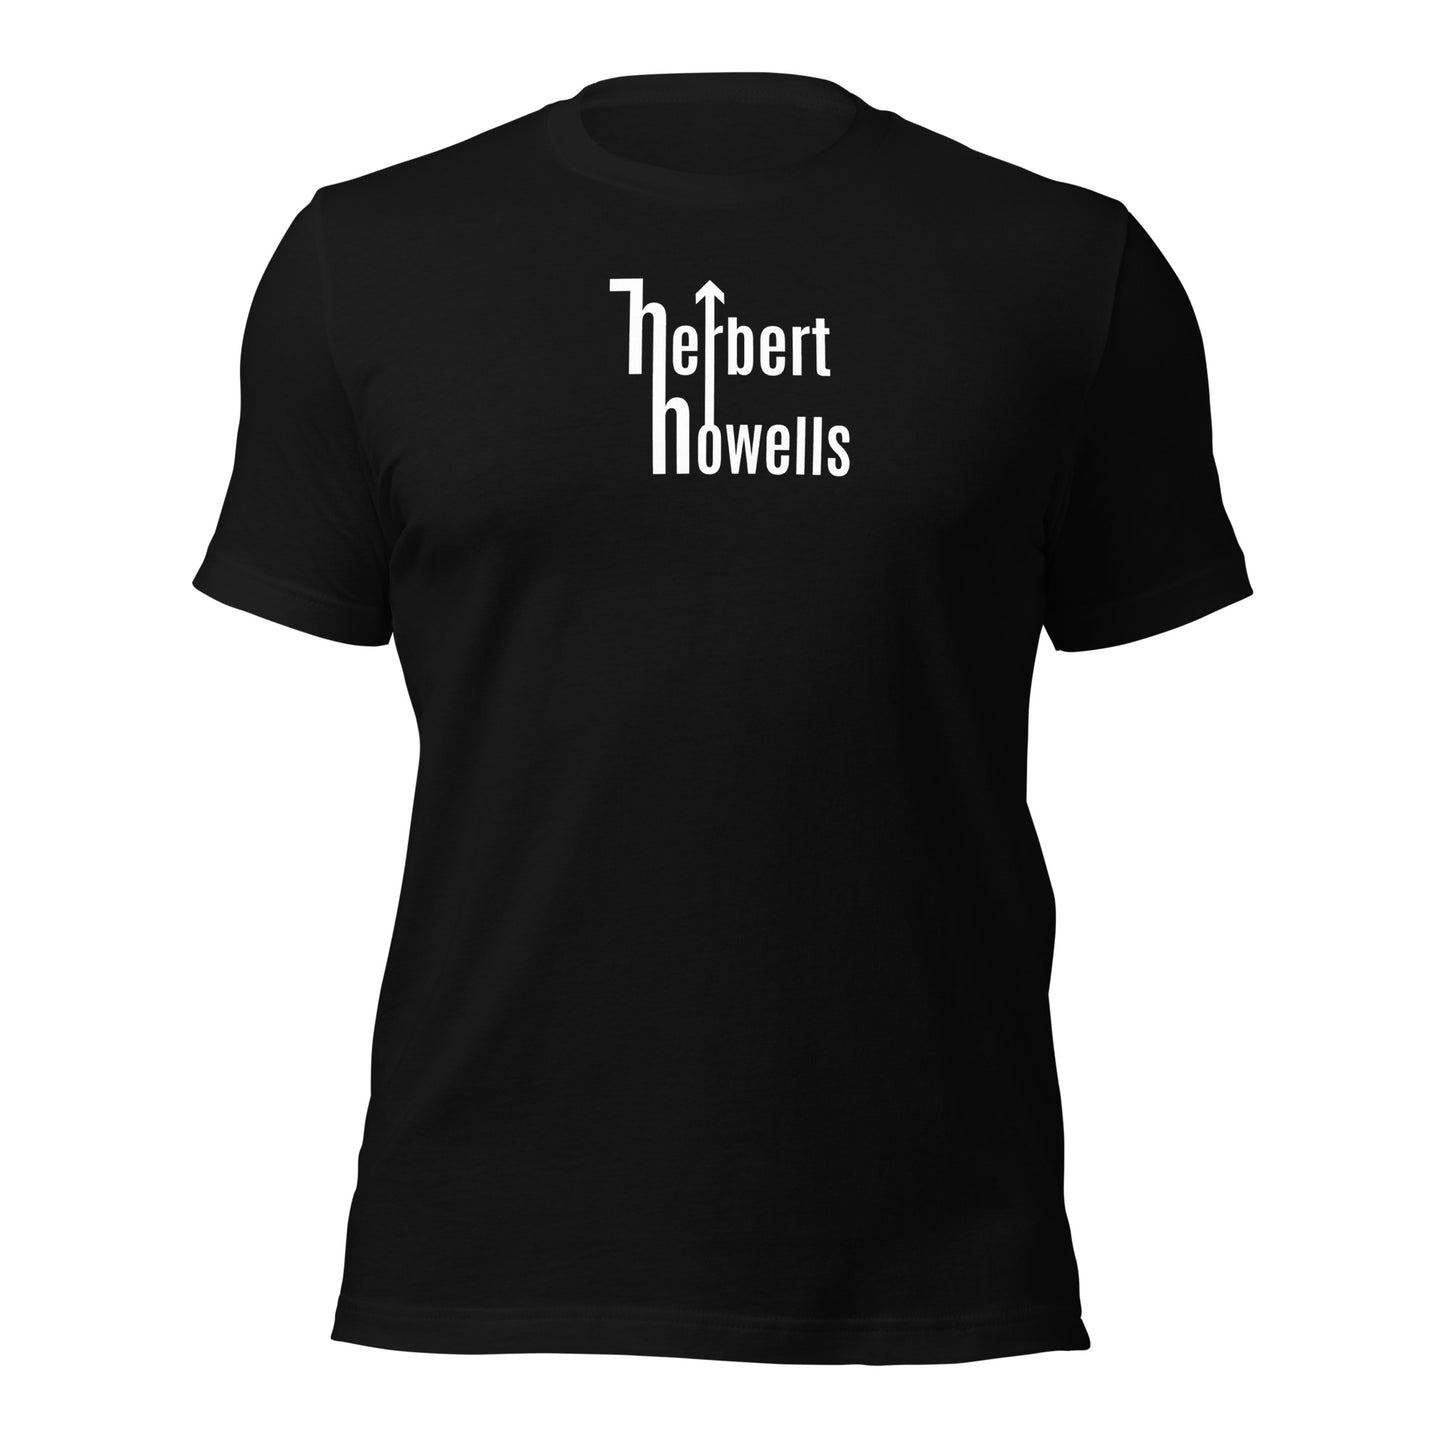 Herbert Howells - Band Tees Unisex t-shirt